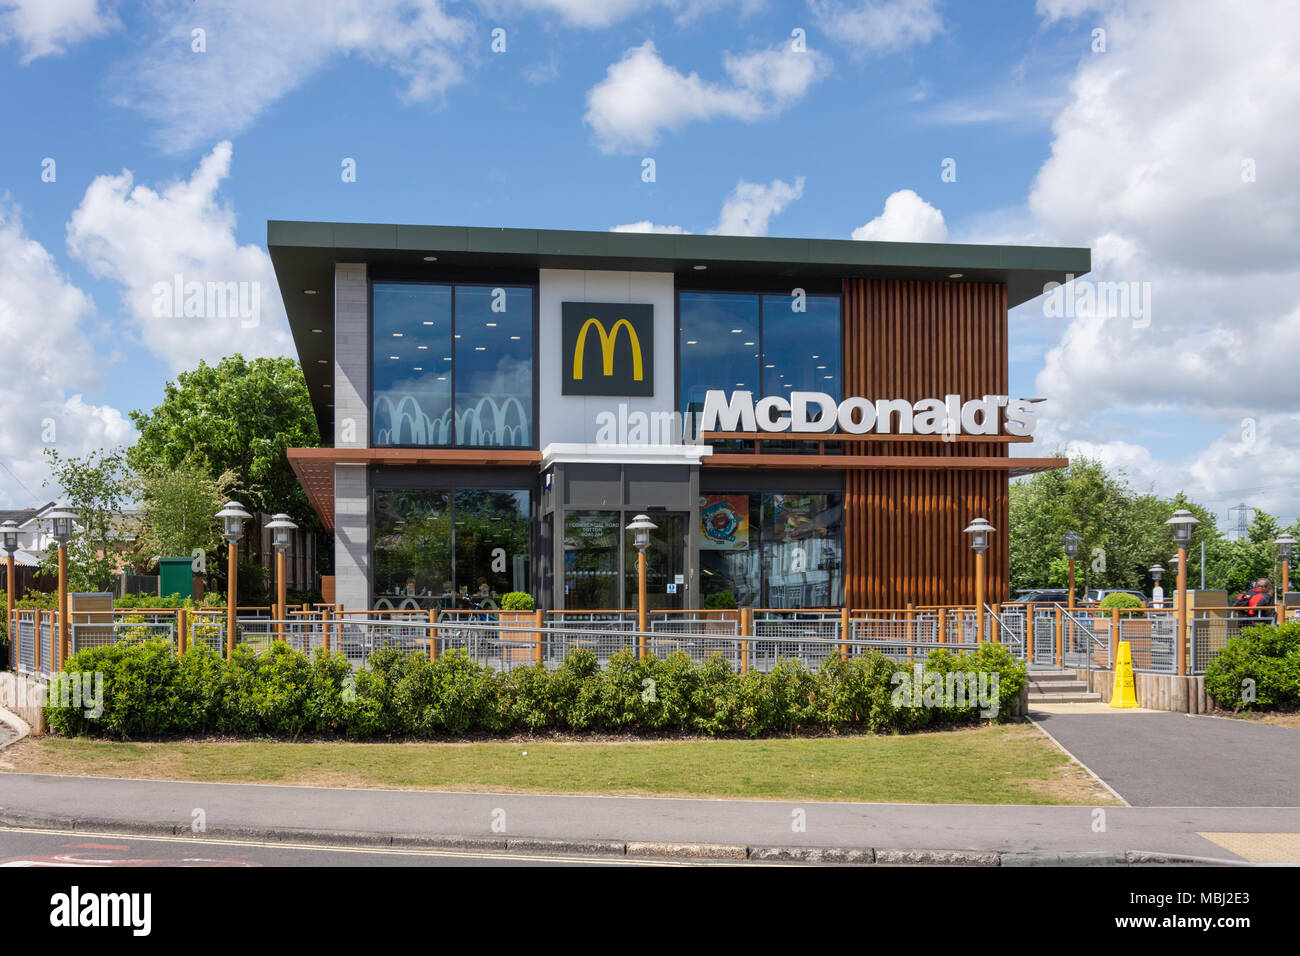 McDonald's Restaurant, Commercial Road, Totton, Totton und Eling, Hampshire, England, Vereinigtes Königreich Stockfoto